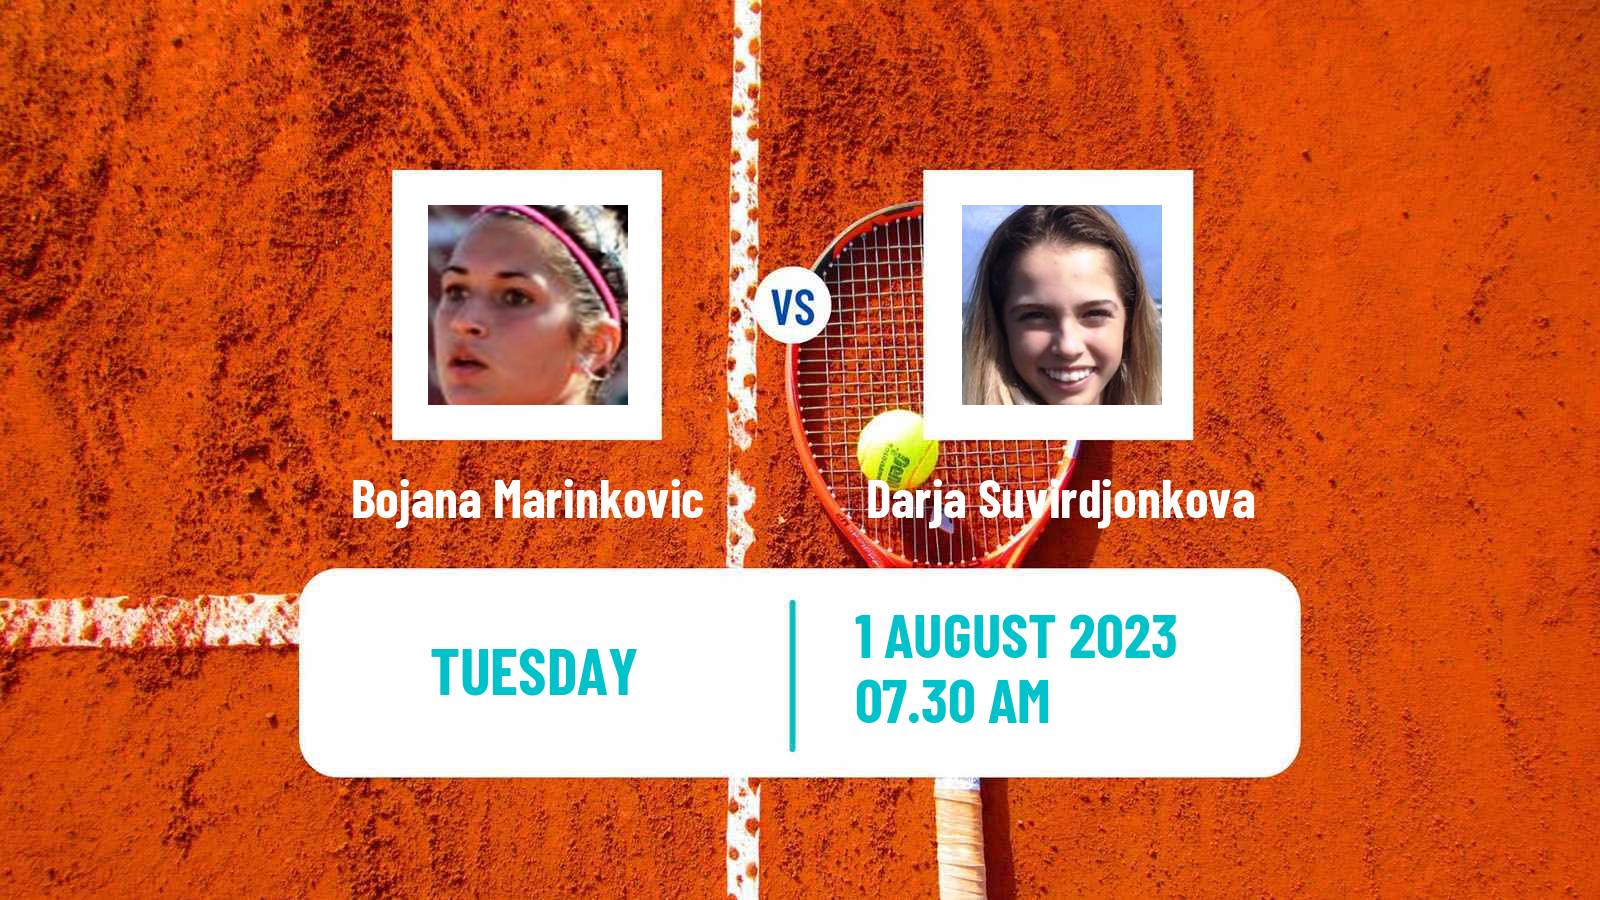 Tennis ITF W15 Eindhoven Women Bojana Marinkovic - Darja Suvirdjonkova